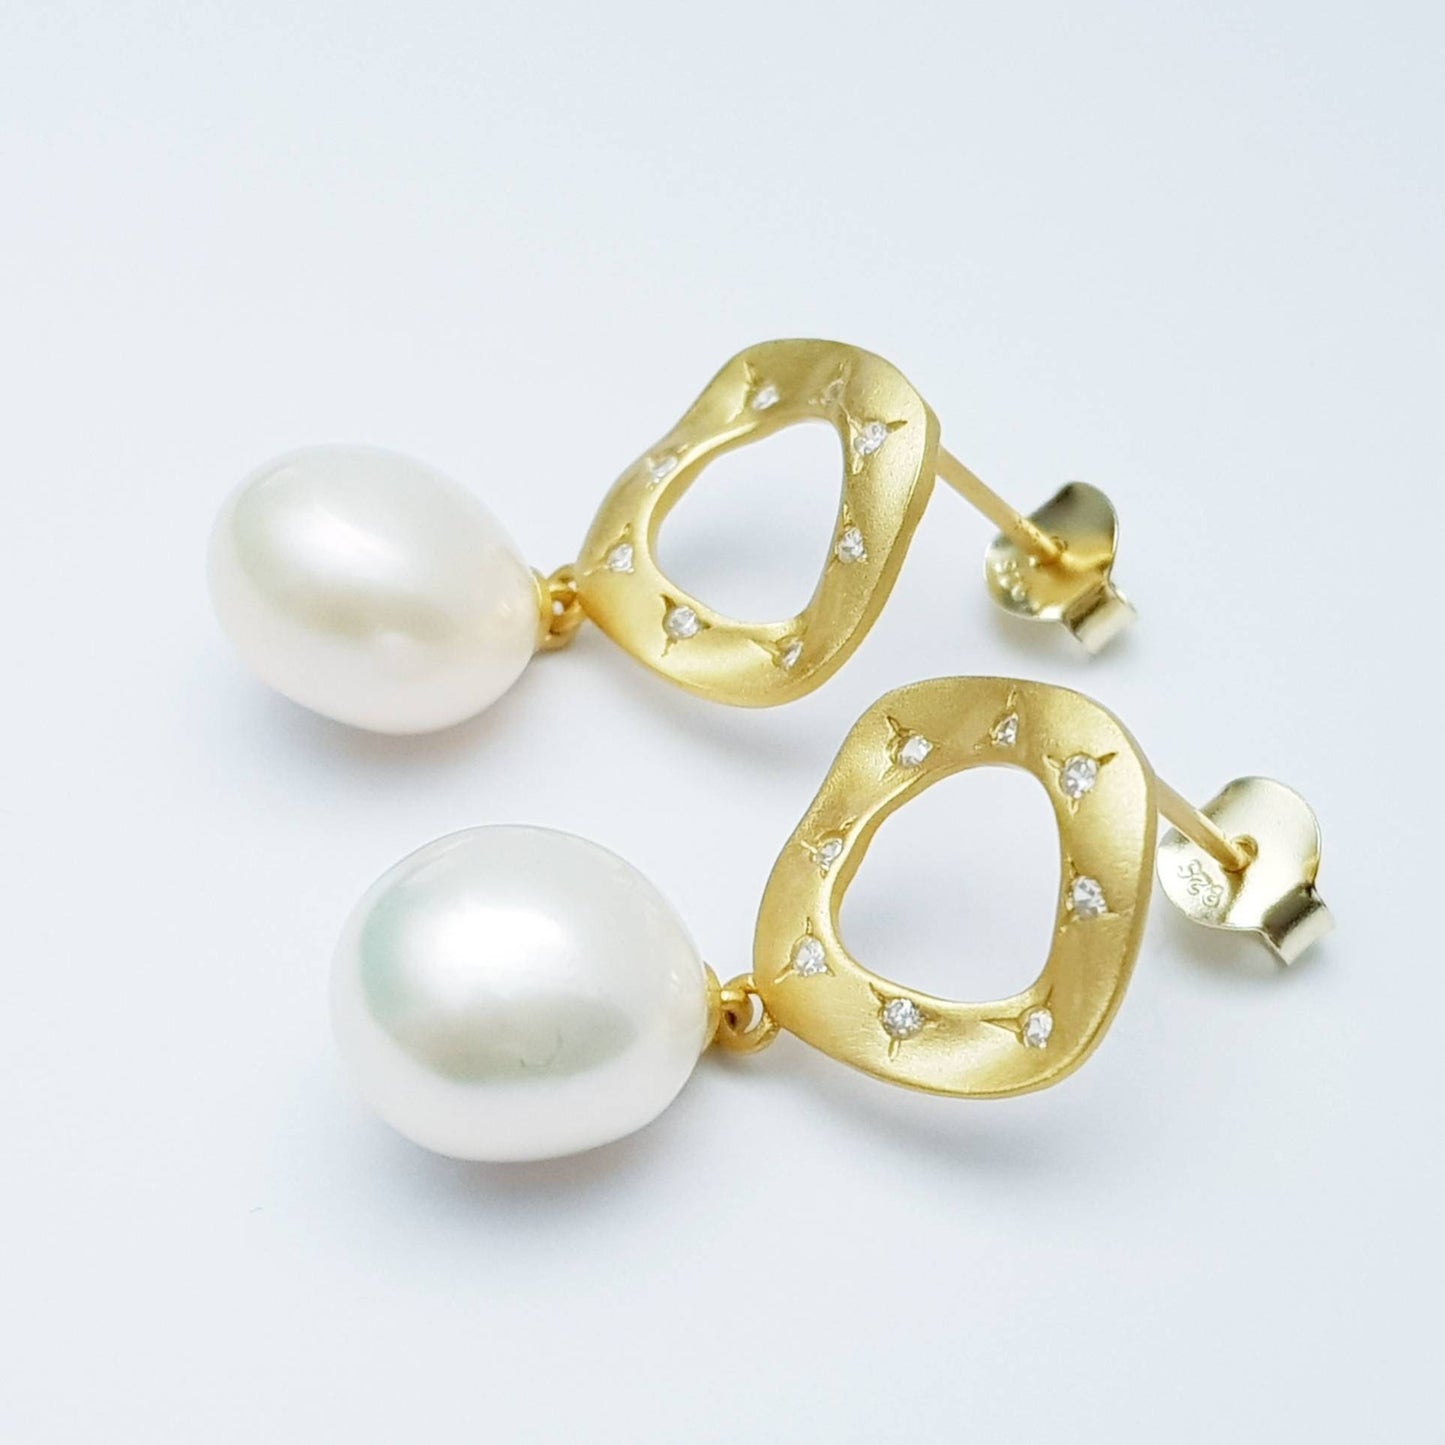 Freshwater Pearl drop earrings, drop and dangle gold pearl earrings